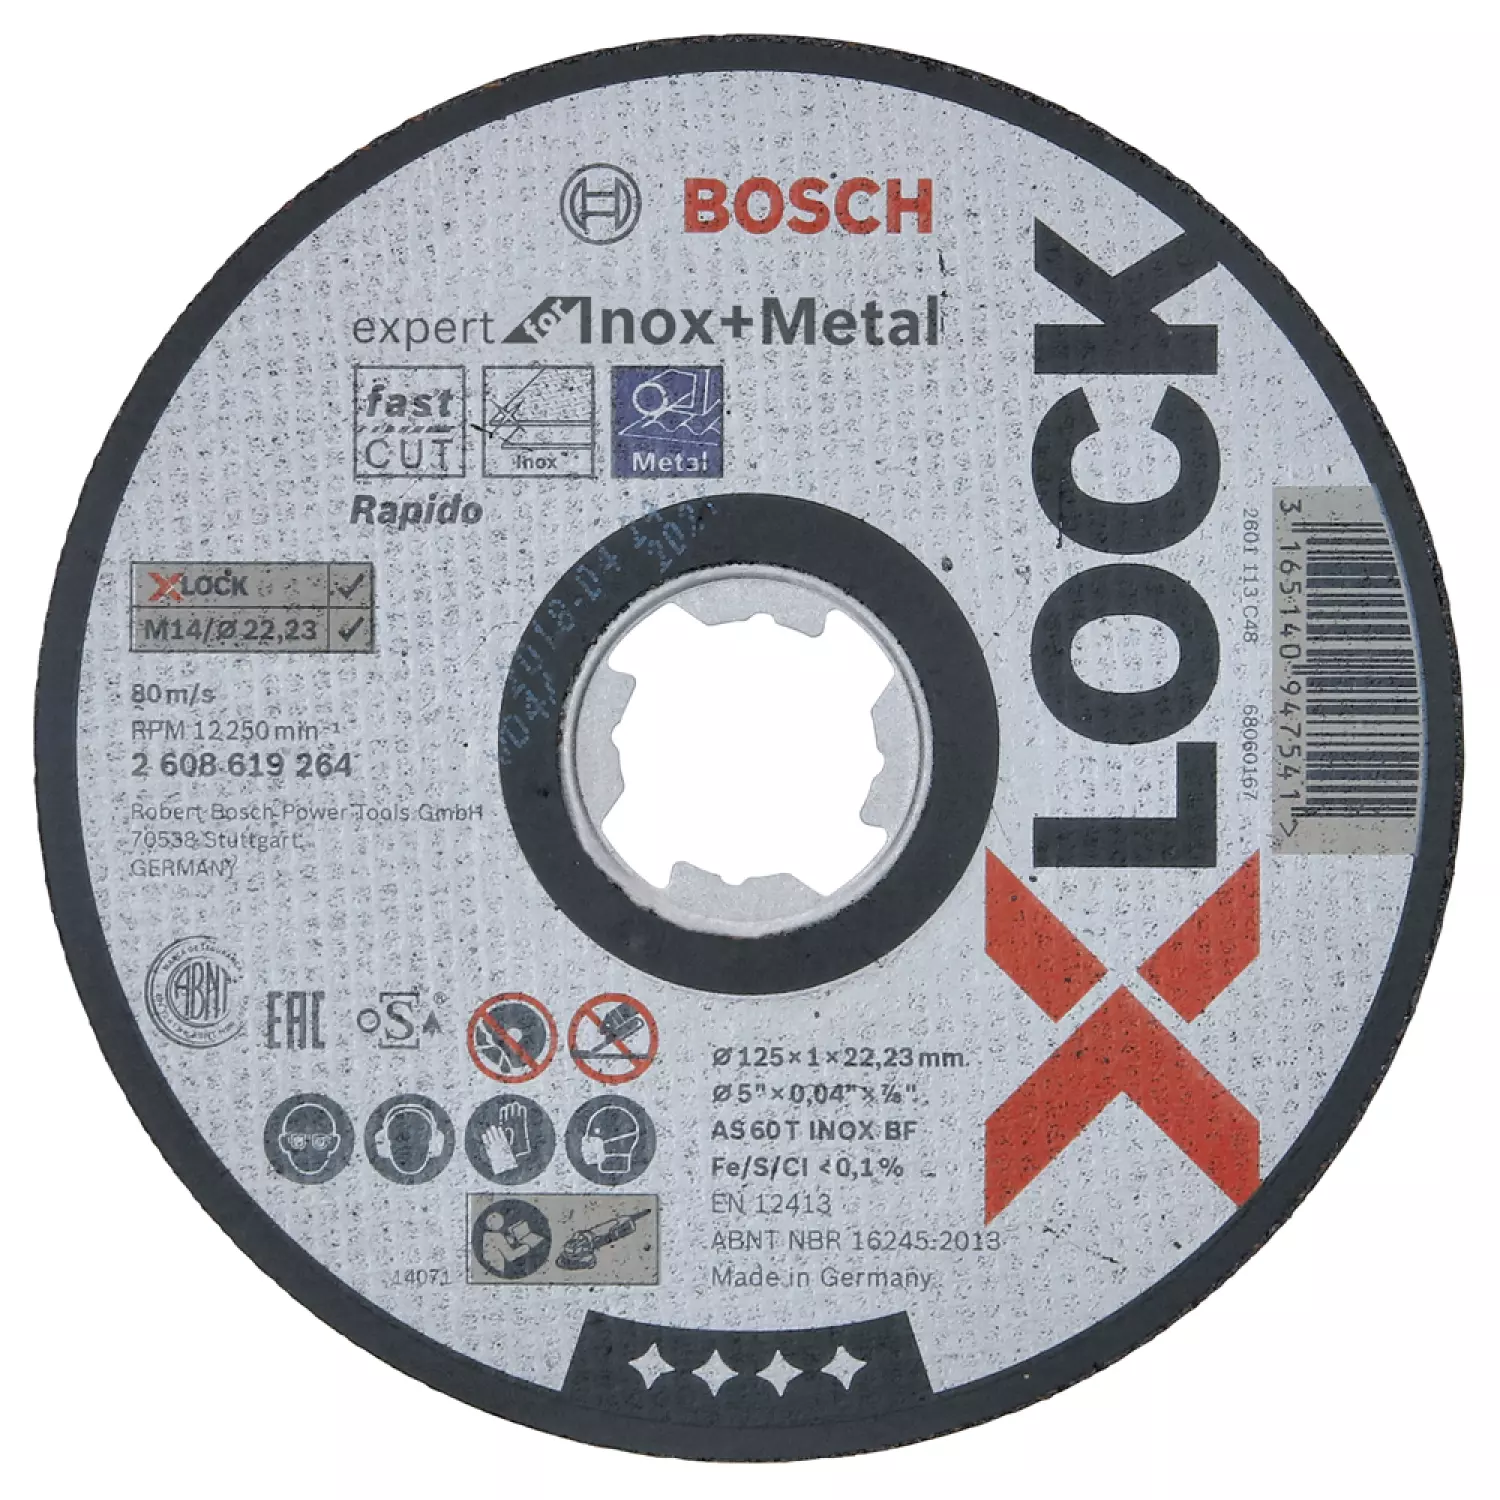 Bosch 2608619264 - X-LOCK Disque à tronçonner Expert forInox & Metal 125x1x22.23mm, plat-image